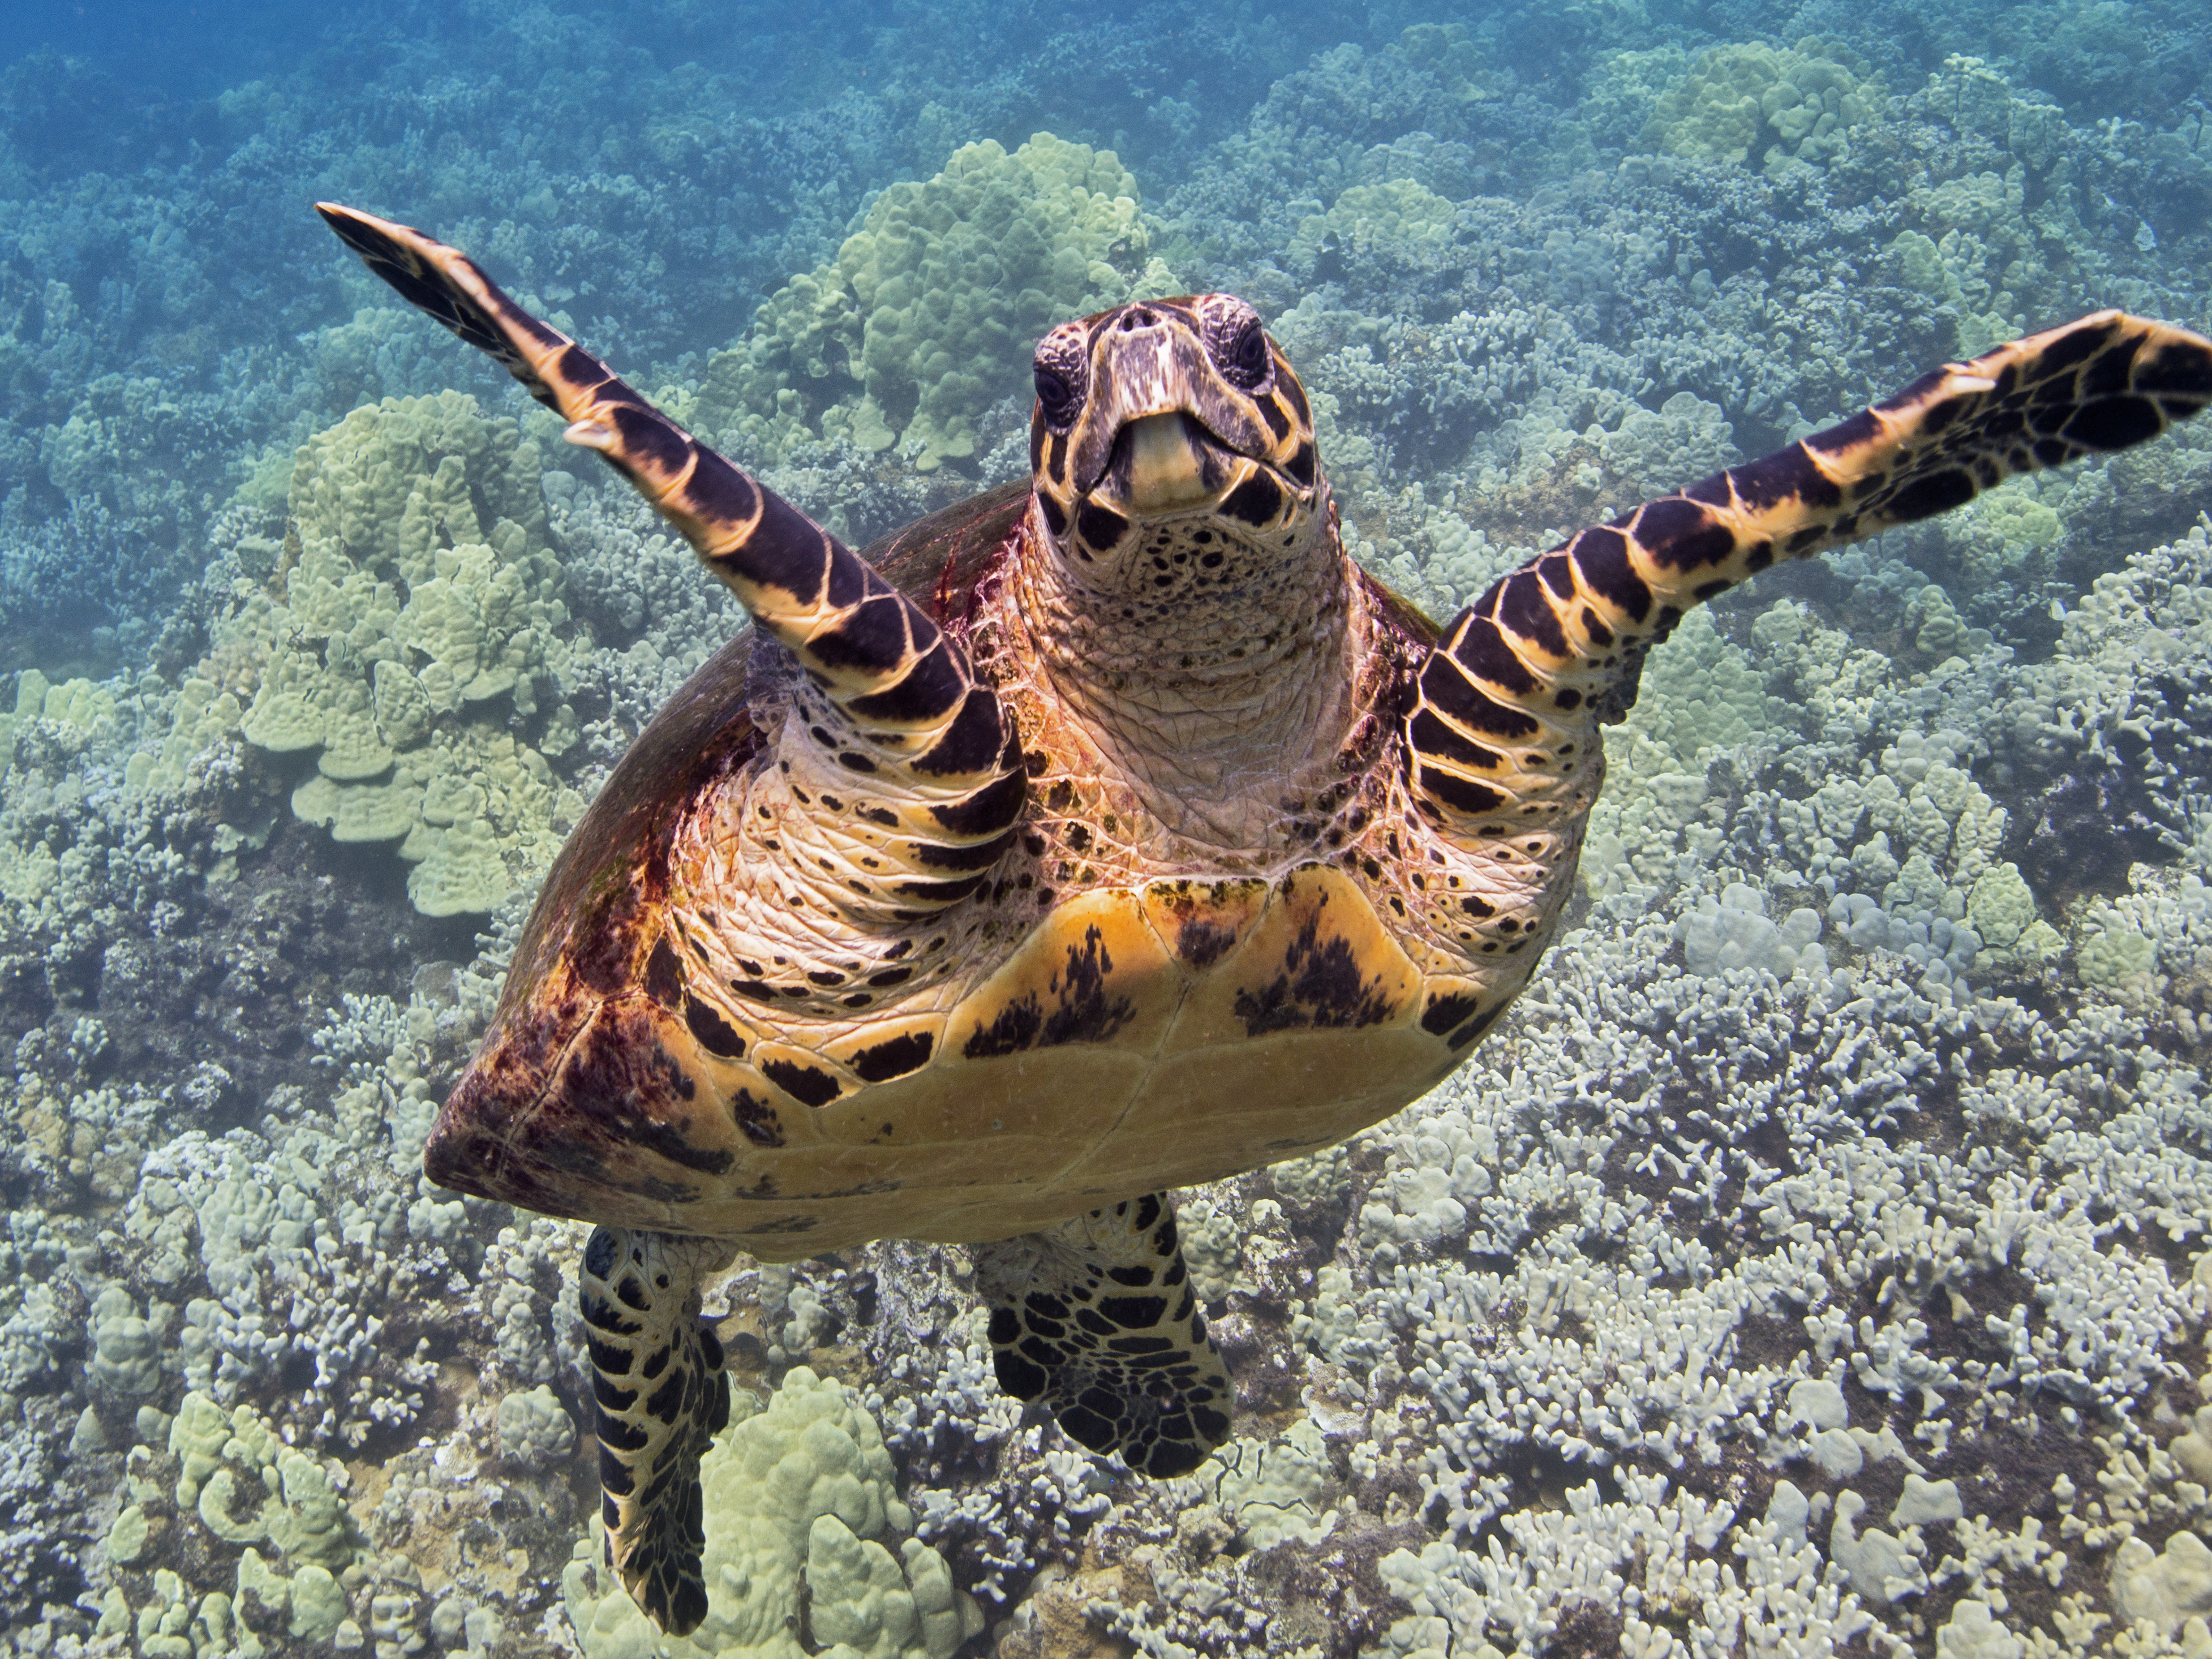 Image: Nesting, Threats, and Social Behaviors of Hawaiian Hawksbill Sea Turtles